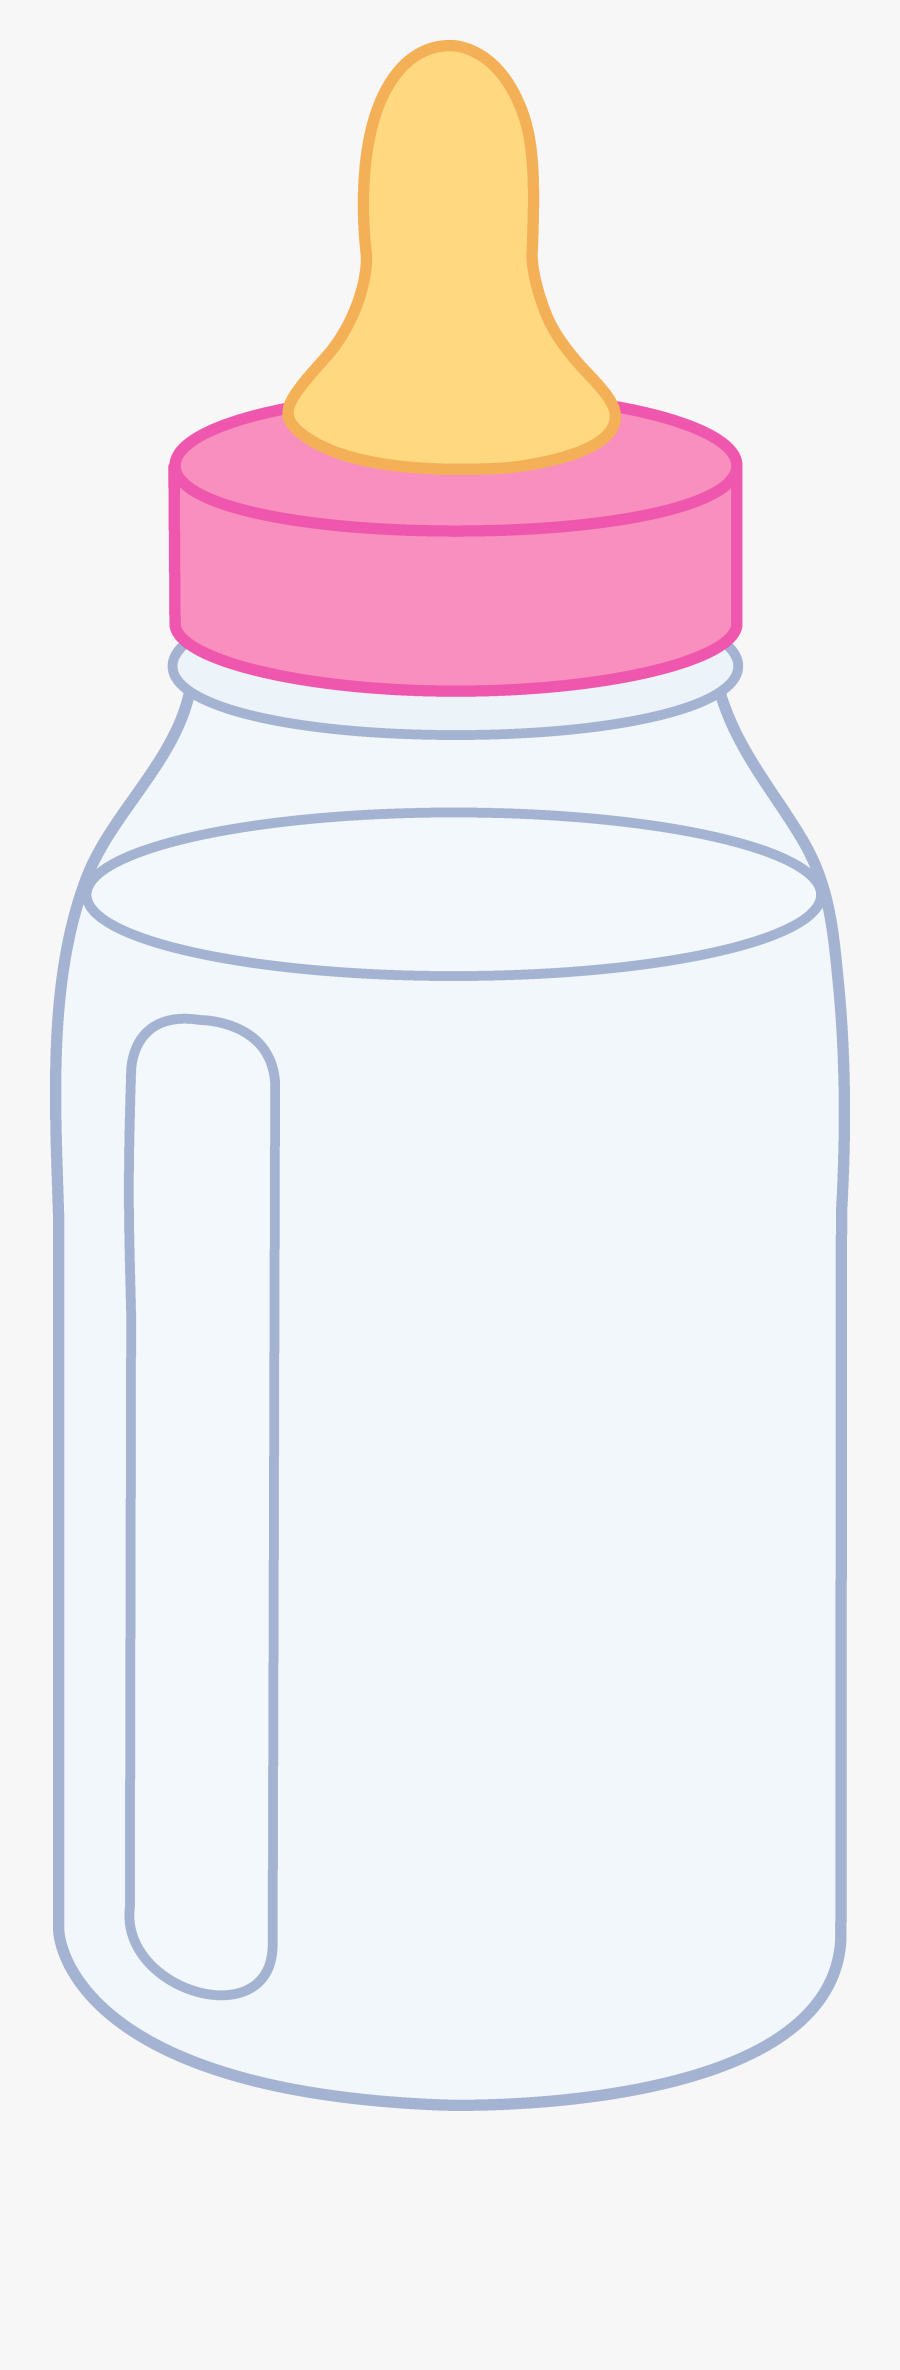 Pink Baby Bottle - Plastic Bottle, Transparent Clipart